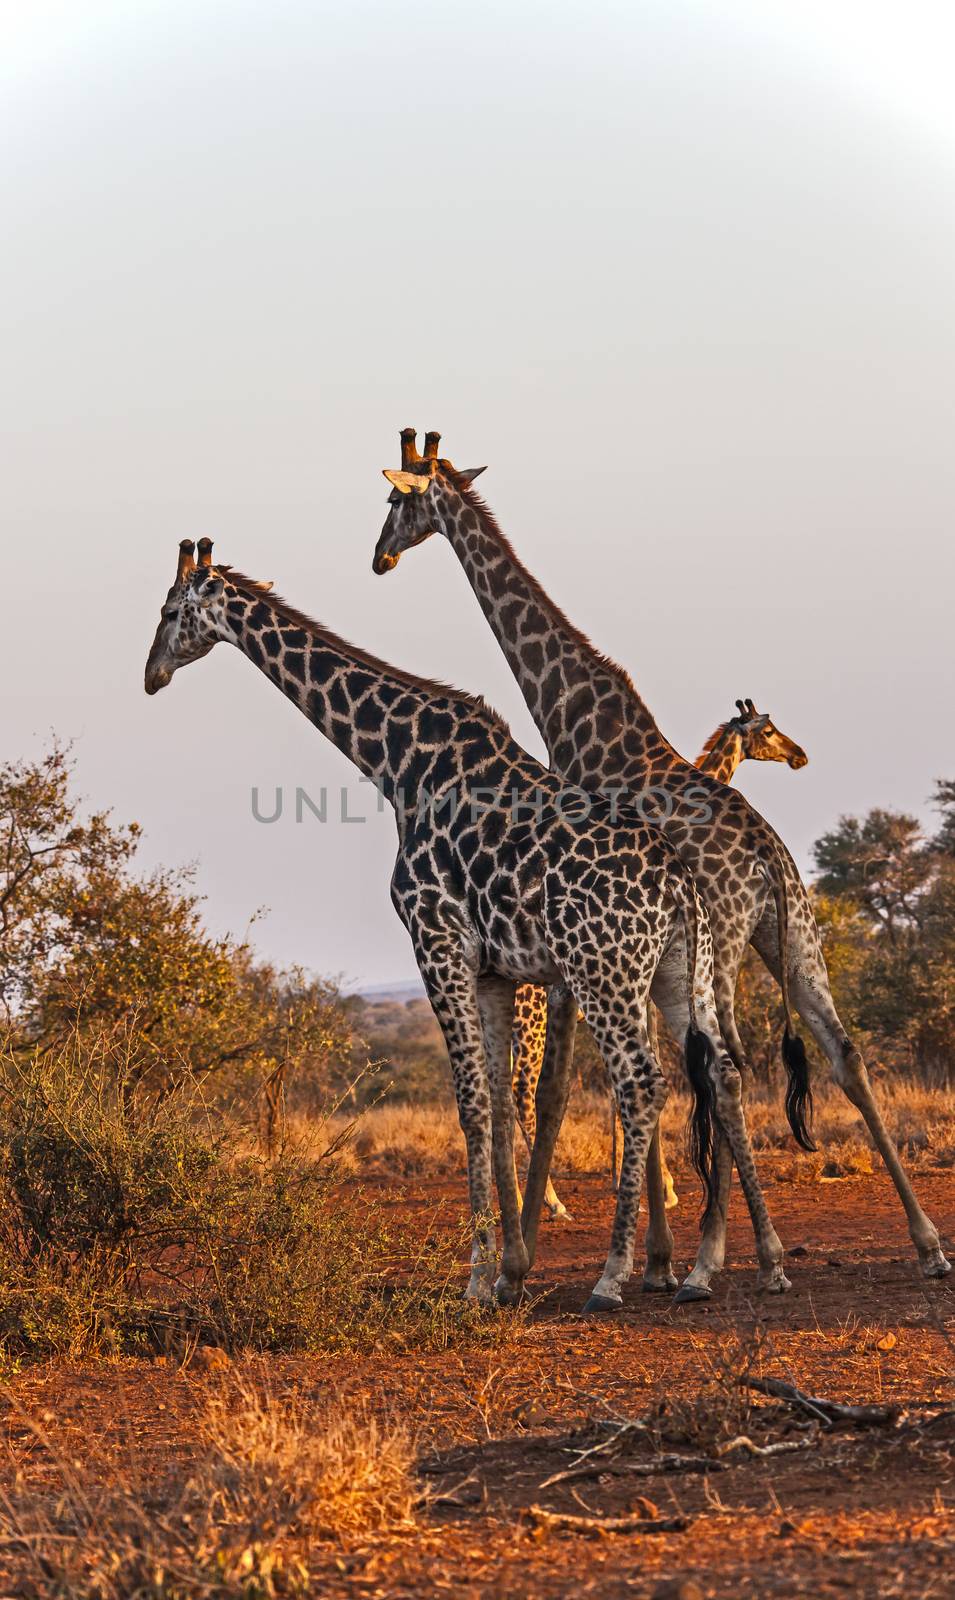 Group of giraffes by kobus_peche